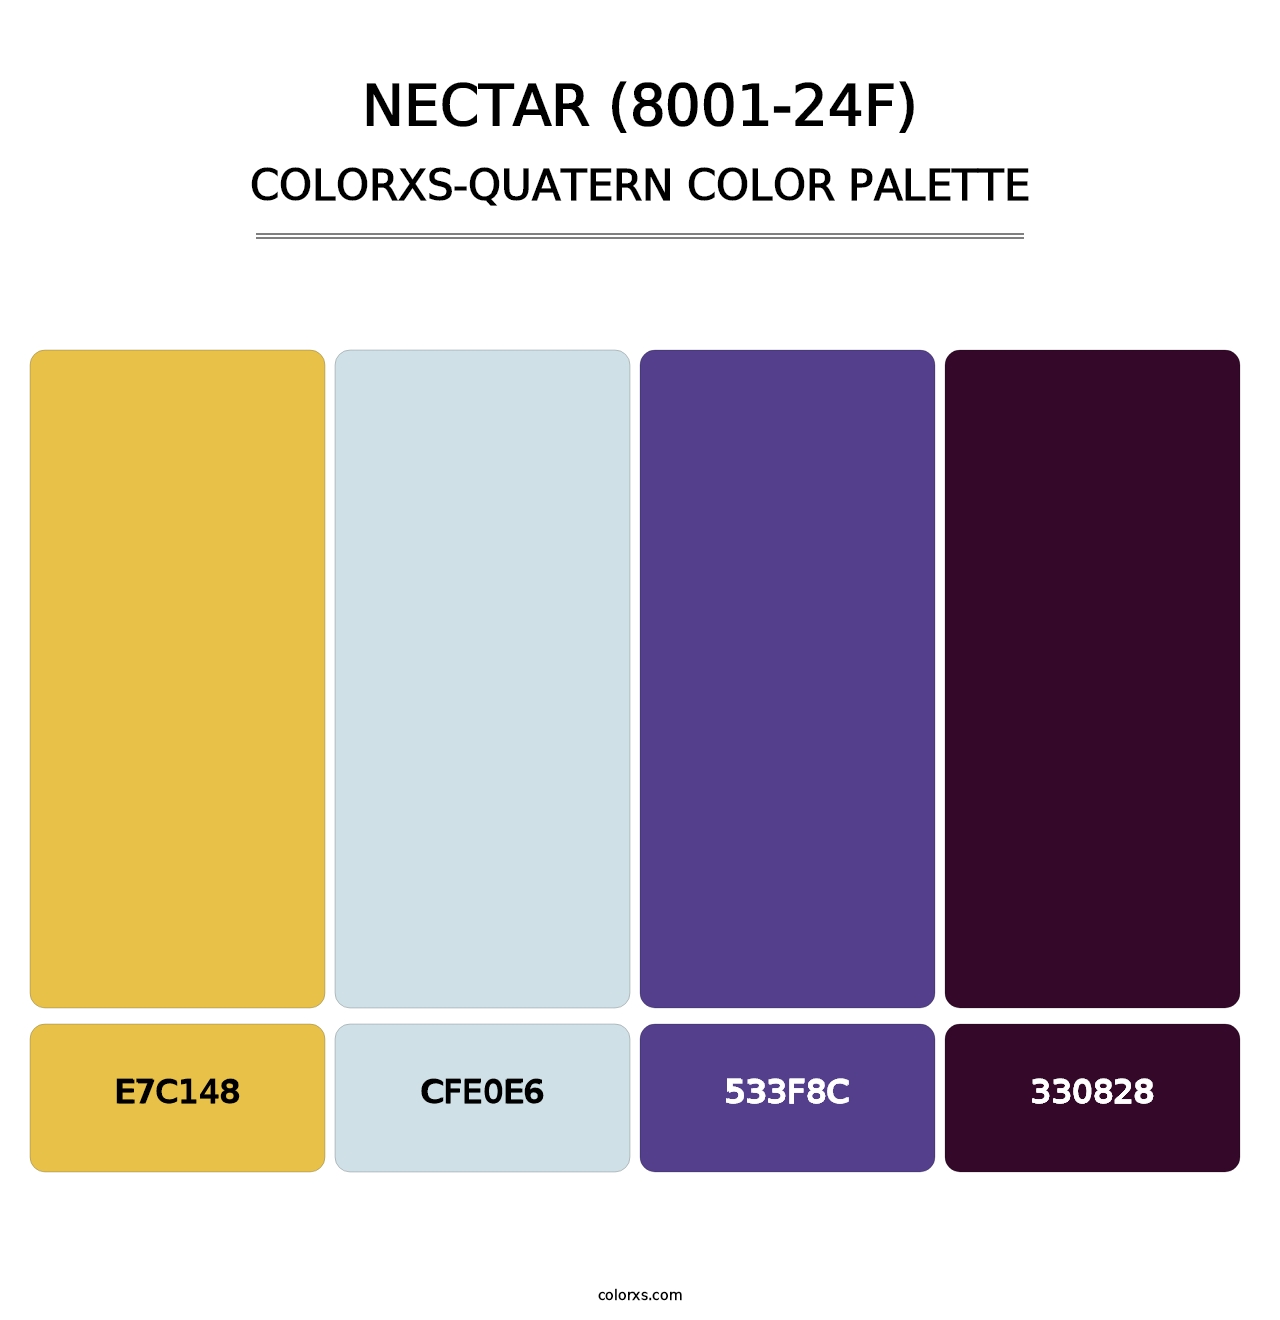 Nectar (8001-24F) - Colorxs Quatern Palette